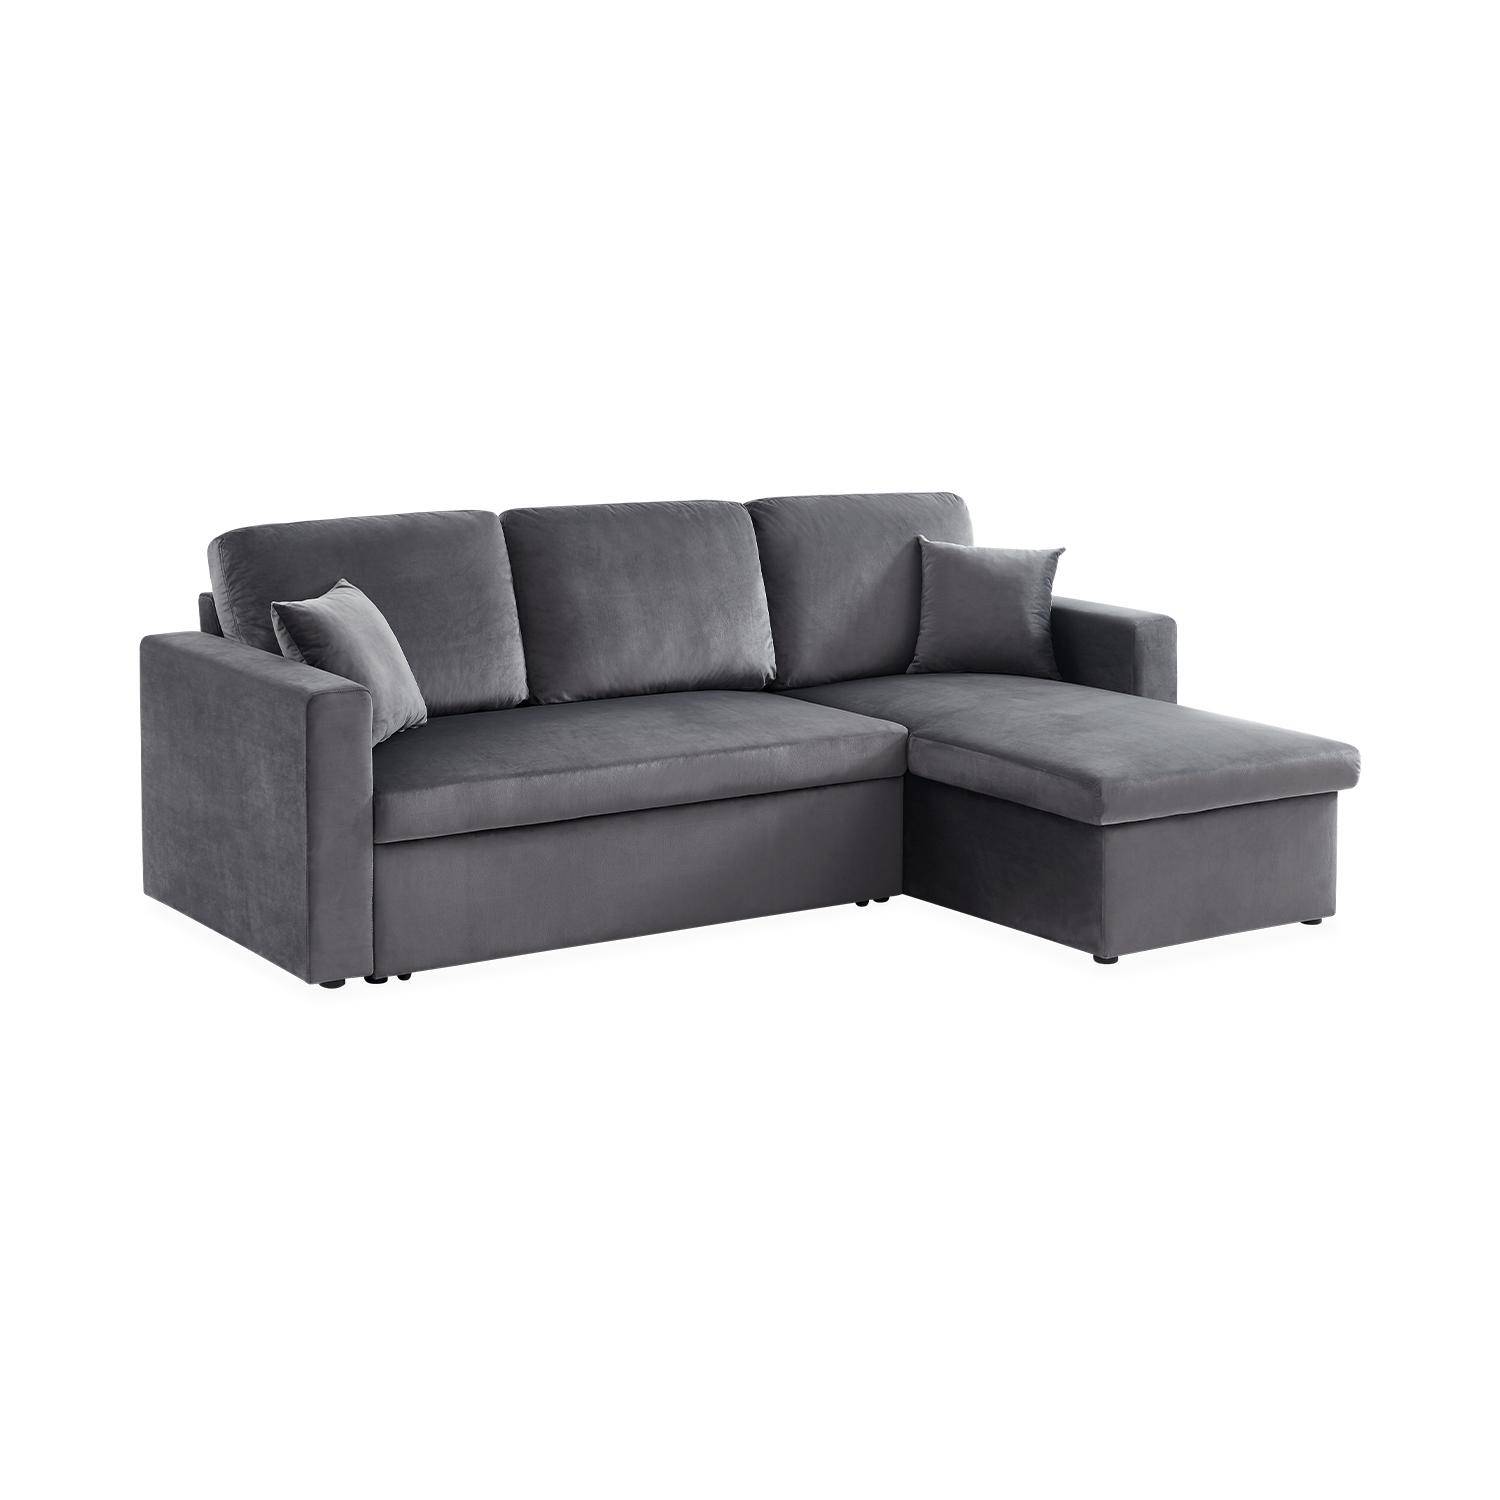 Dark grey velvet 3-seater convertible corner sofa, reversible corner armchair, storage box, modular bed,sweeek,Photo4